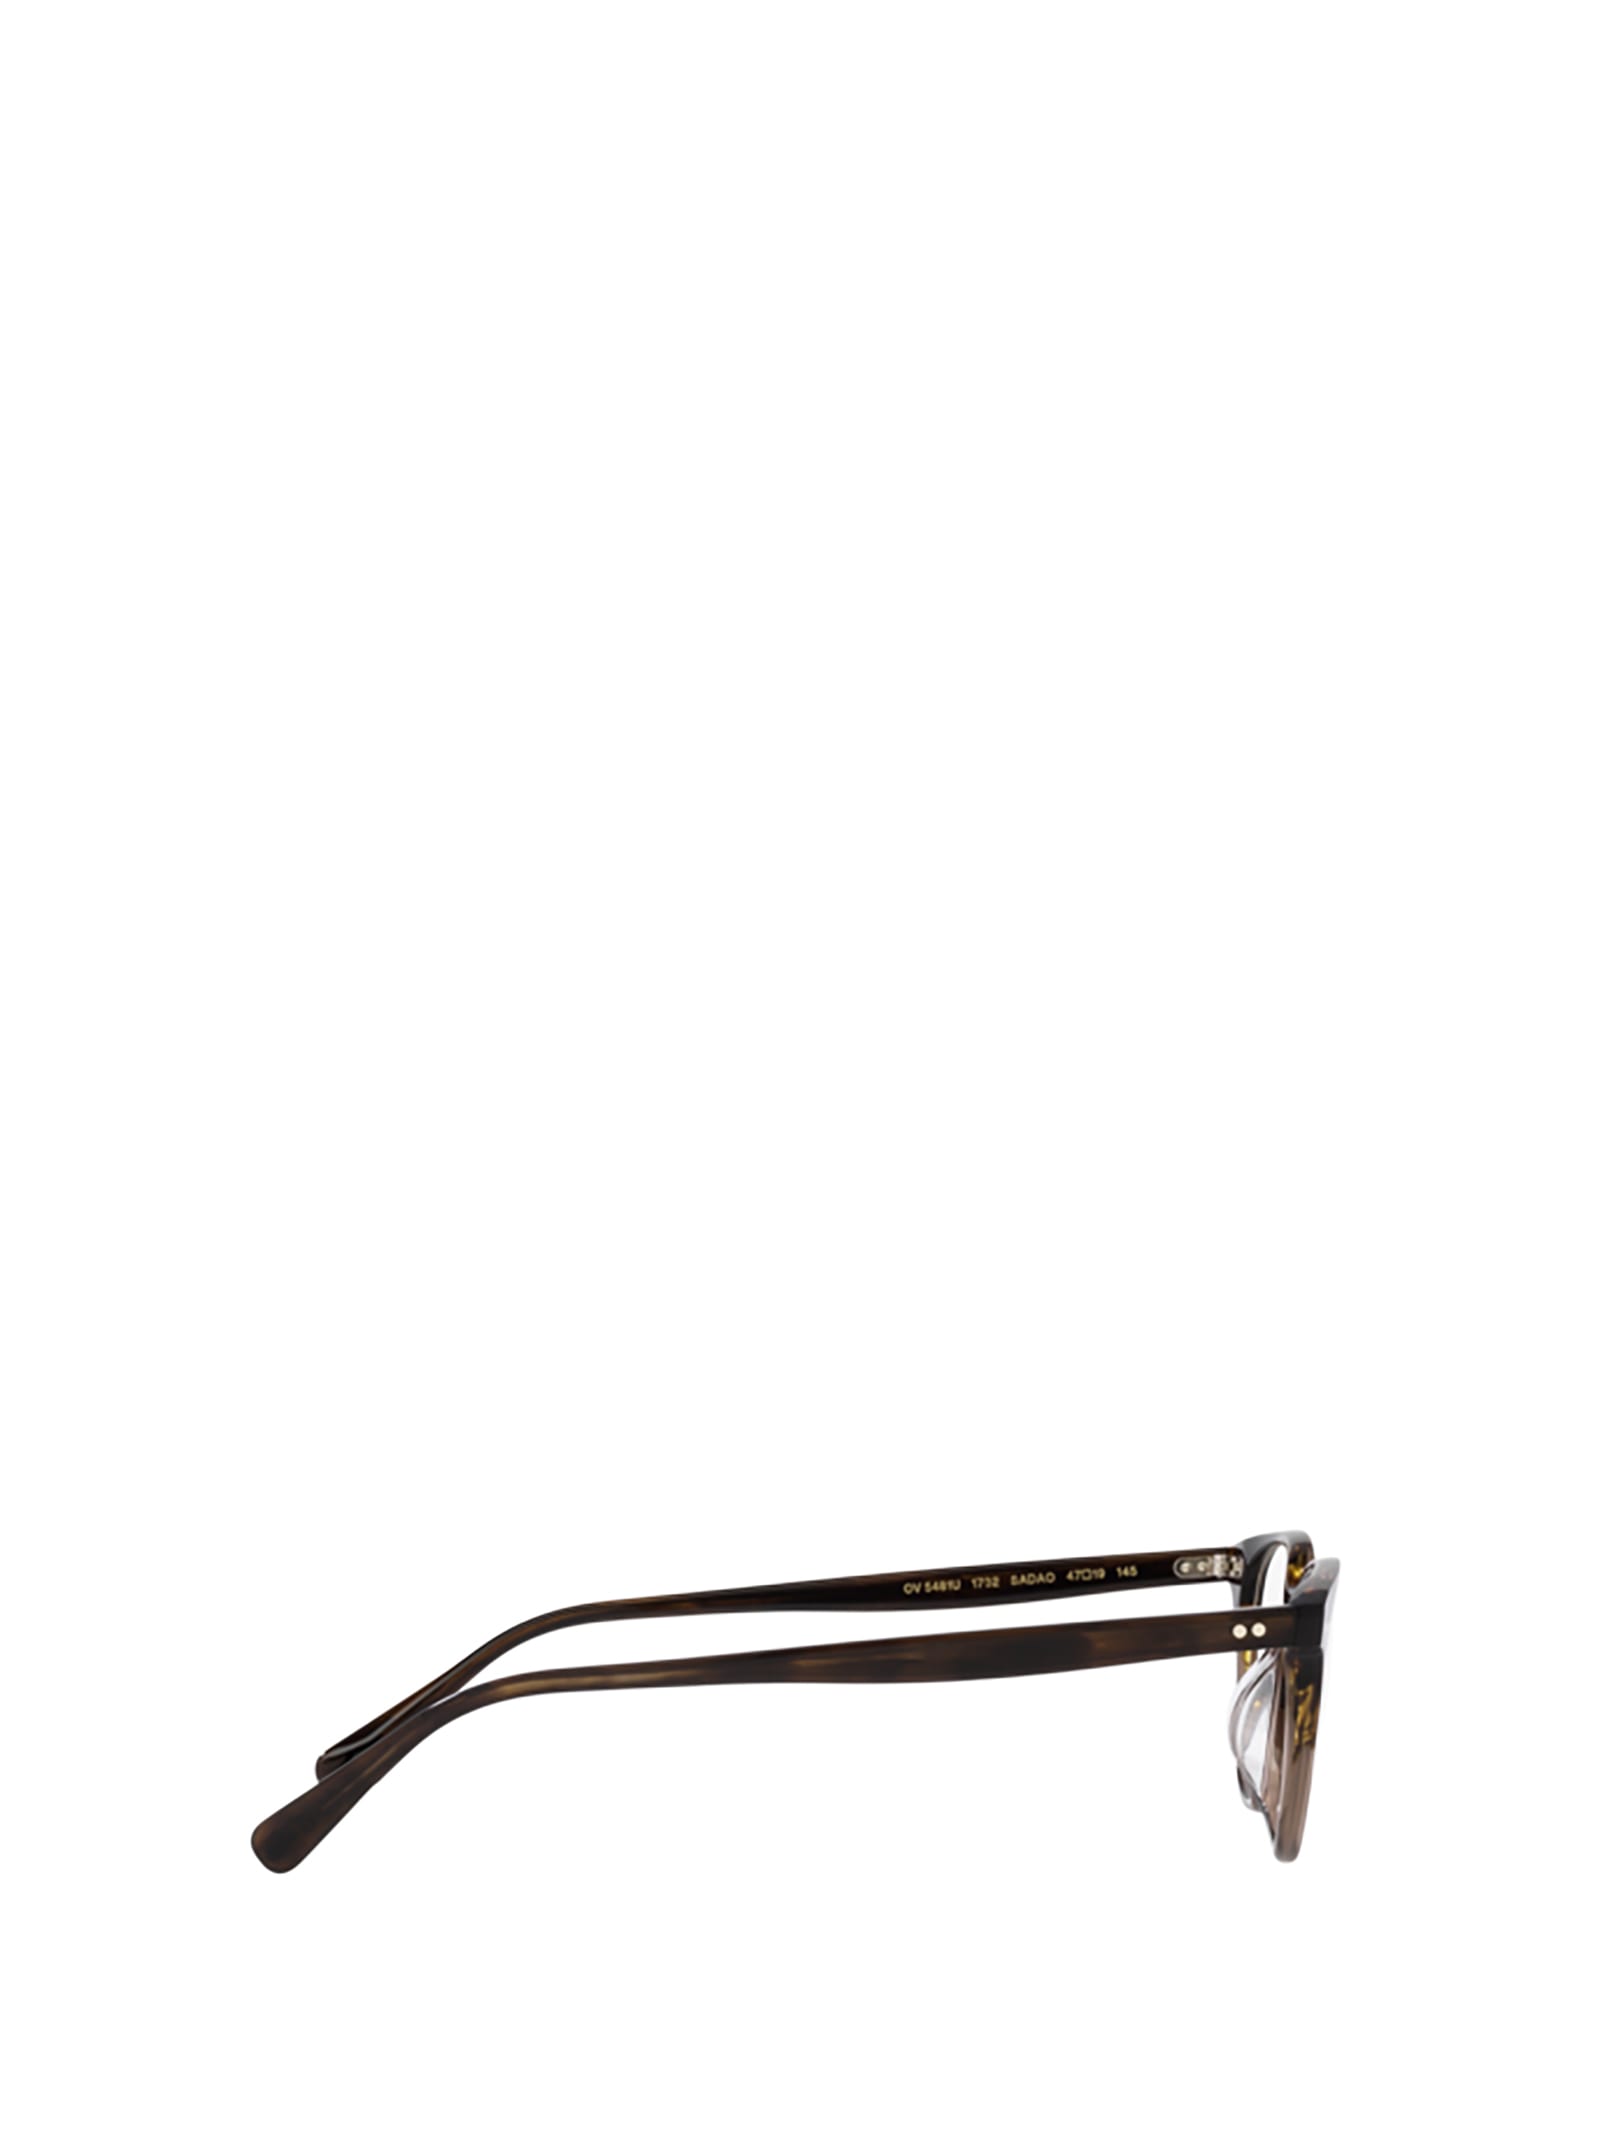 Shop Oliver Peoples Ov5481u Sedona Red / Taupe Gradient Glasses